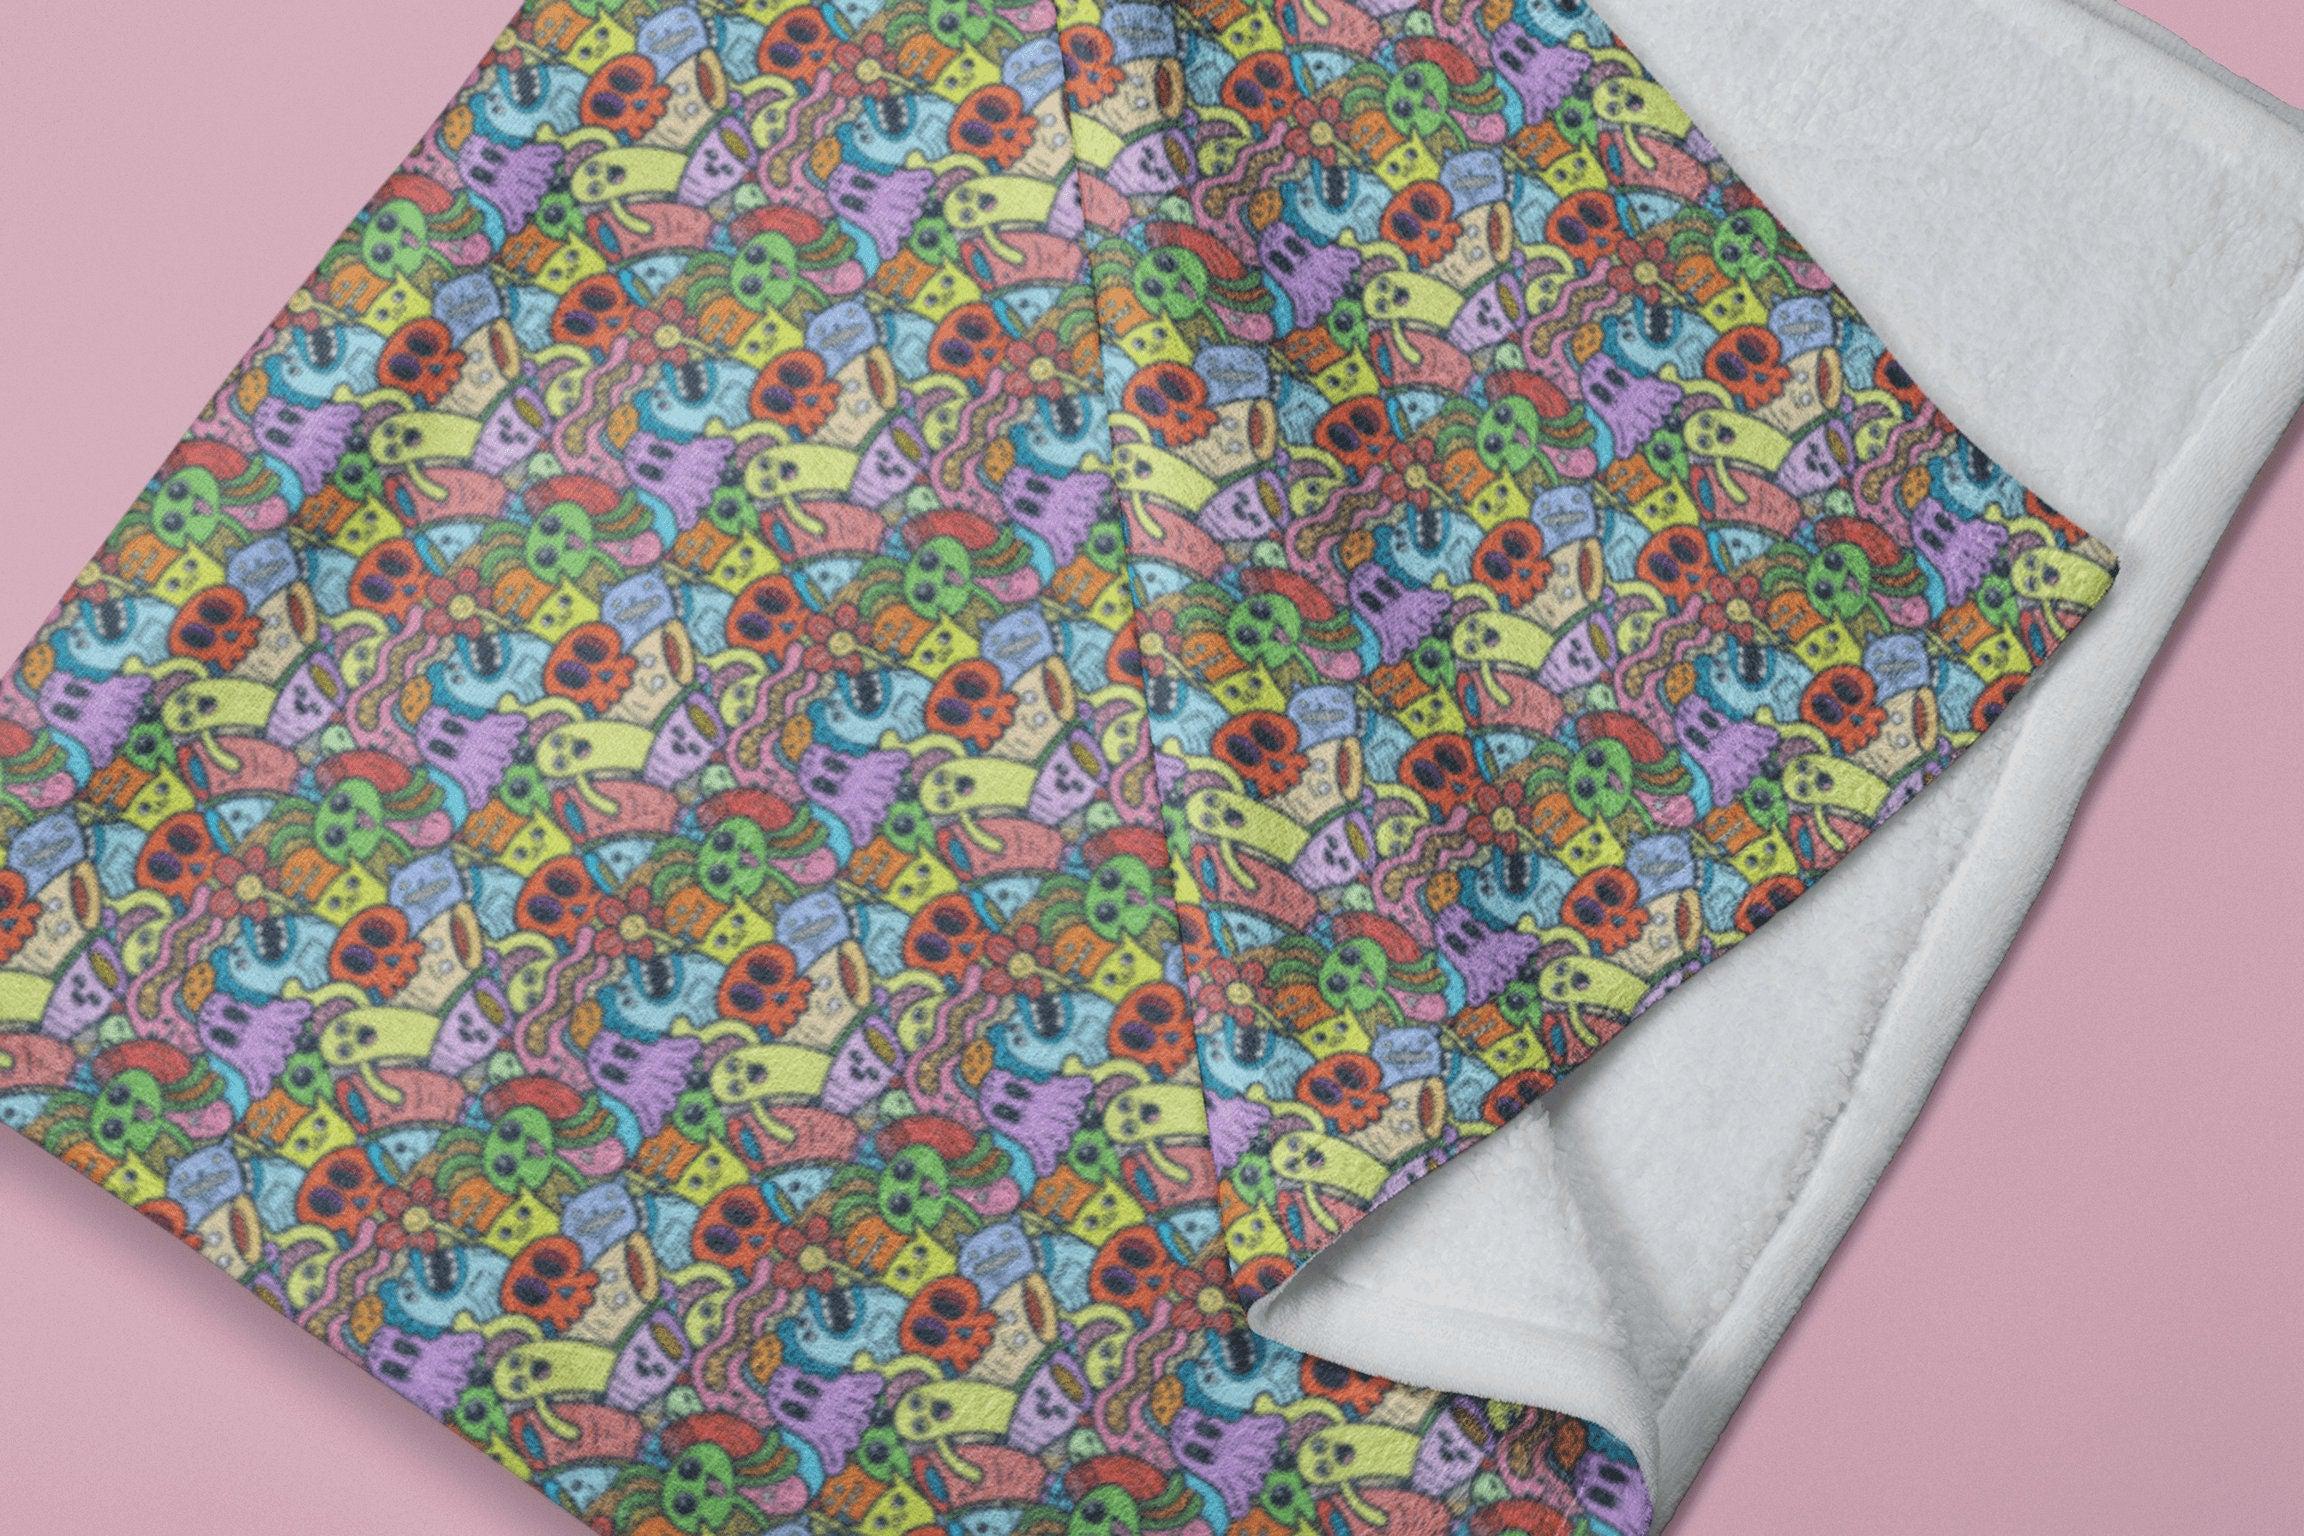 daintyduvet Colorful Kawaii Doodle Soft Fluffy Velvet Flannel Fleece Throw Blanket